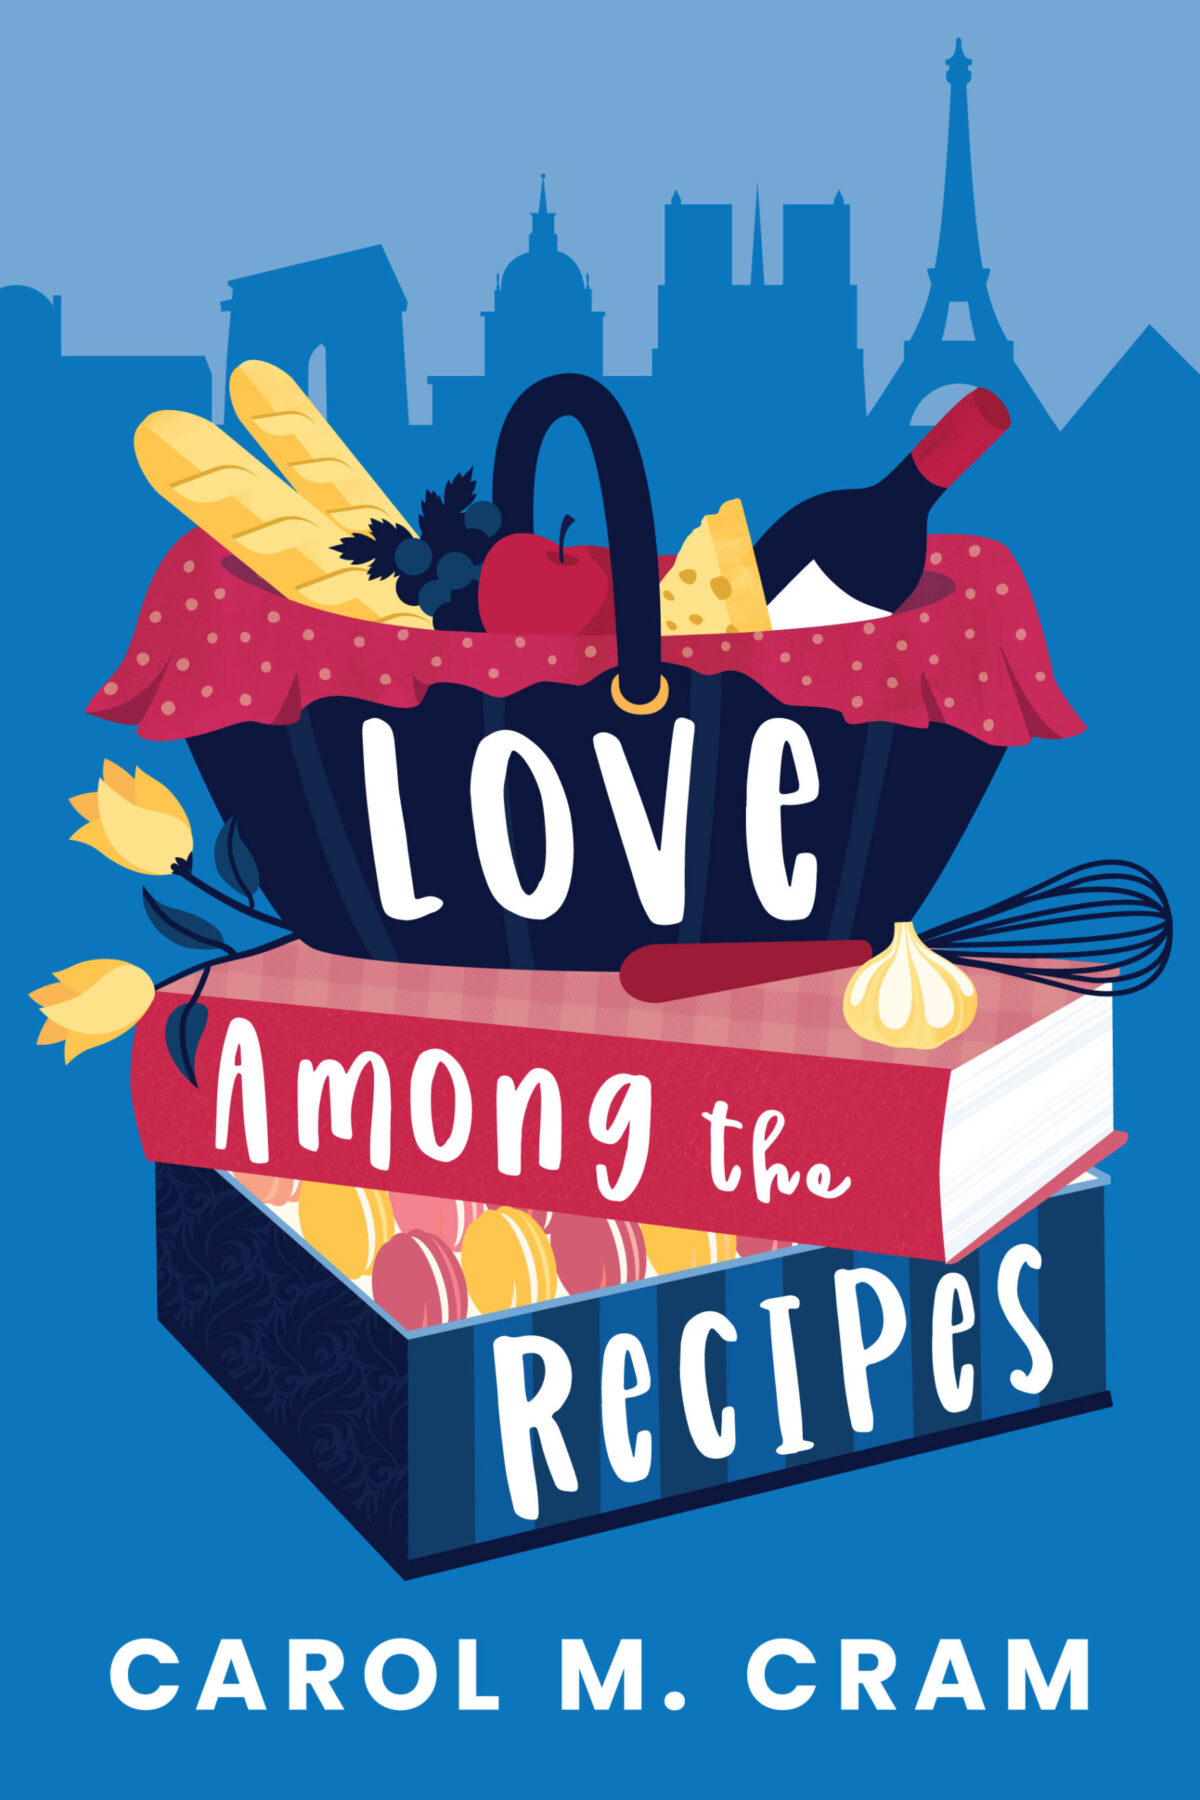 Novel called "Love Among the Recipes" by Carol M. Cram